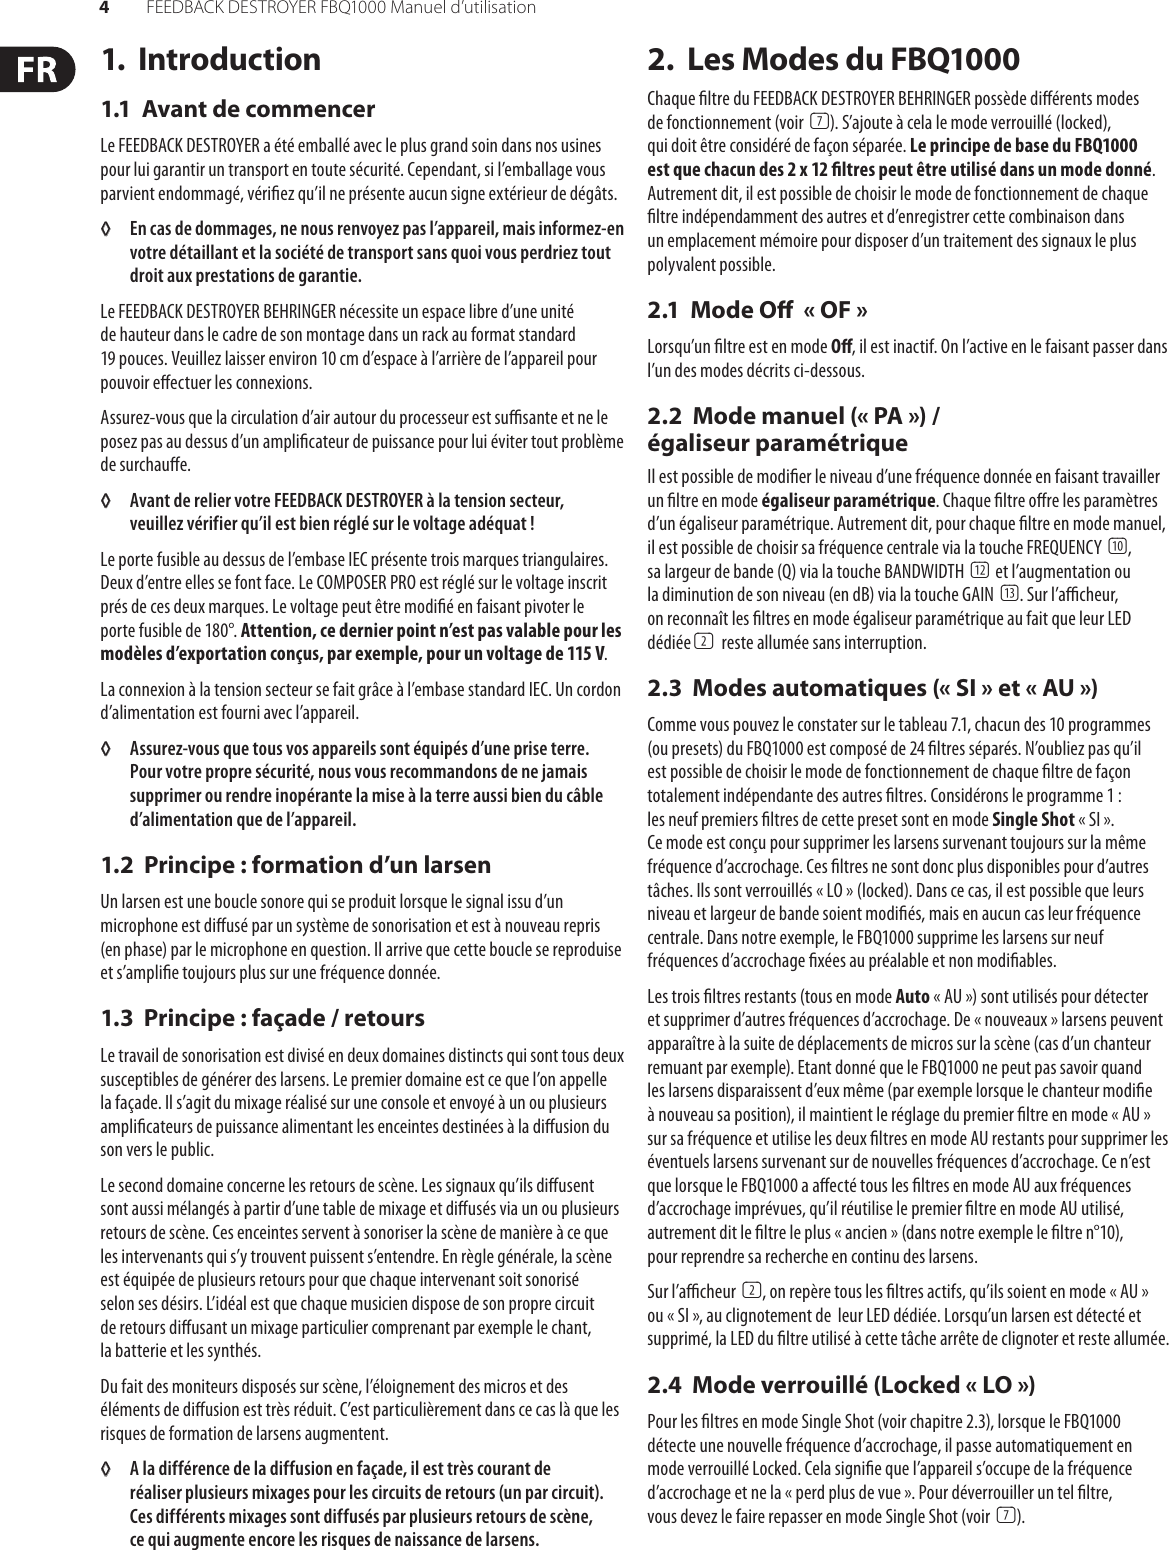 Page 4 of 12 - FEEDBACK DESTROYER FBQ1000 Behringer User Manual (French) P0A3R M FR